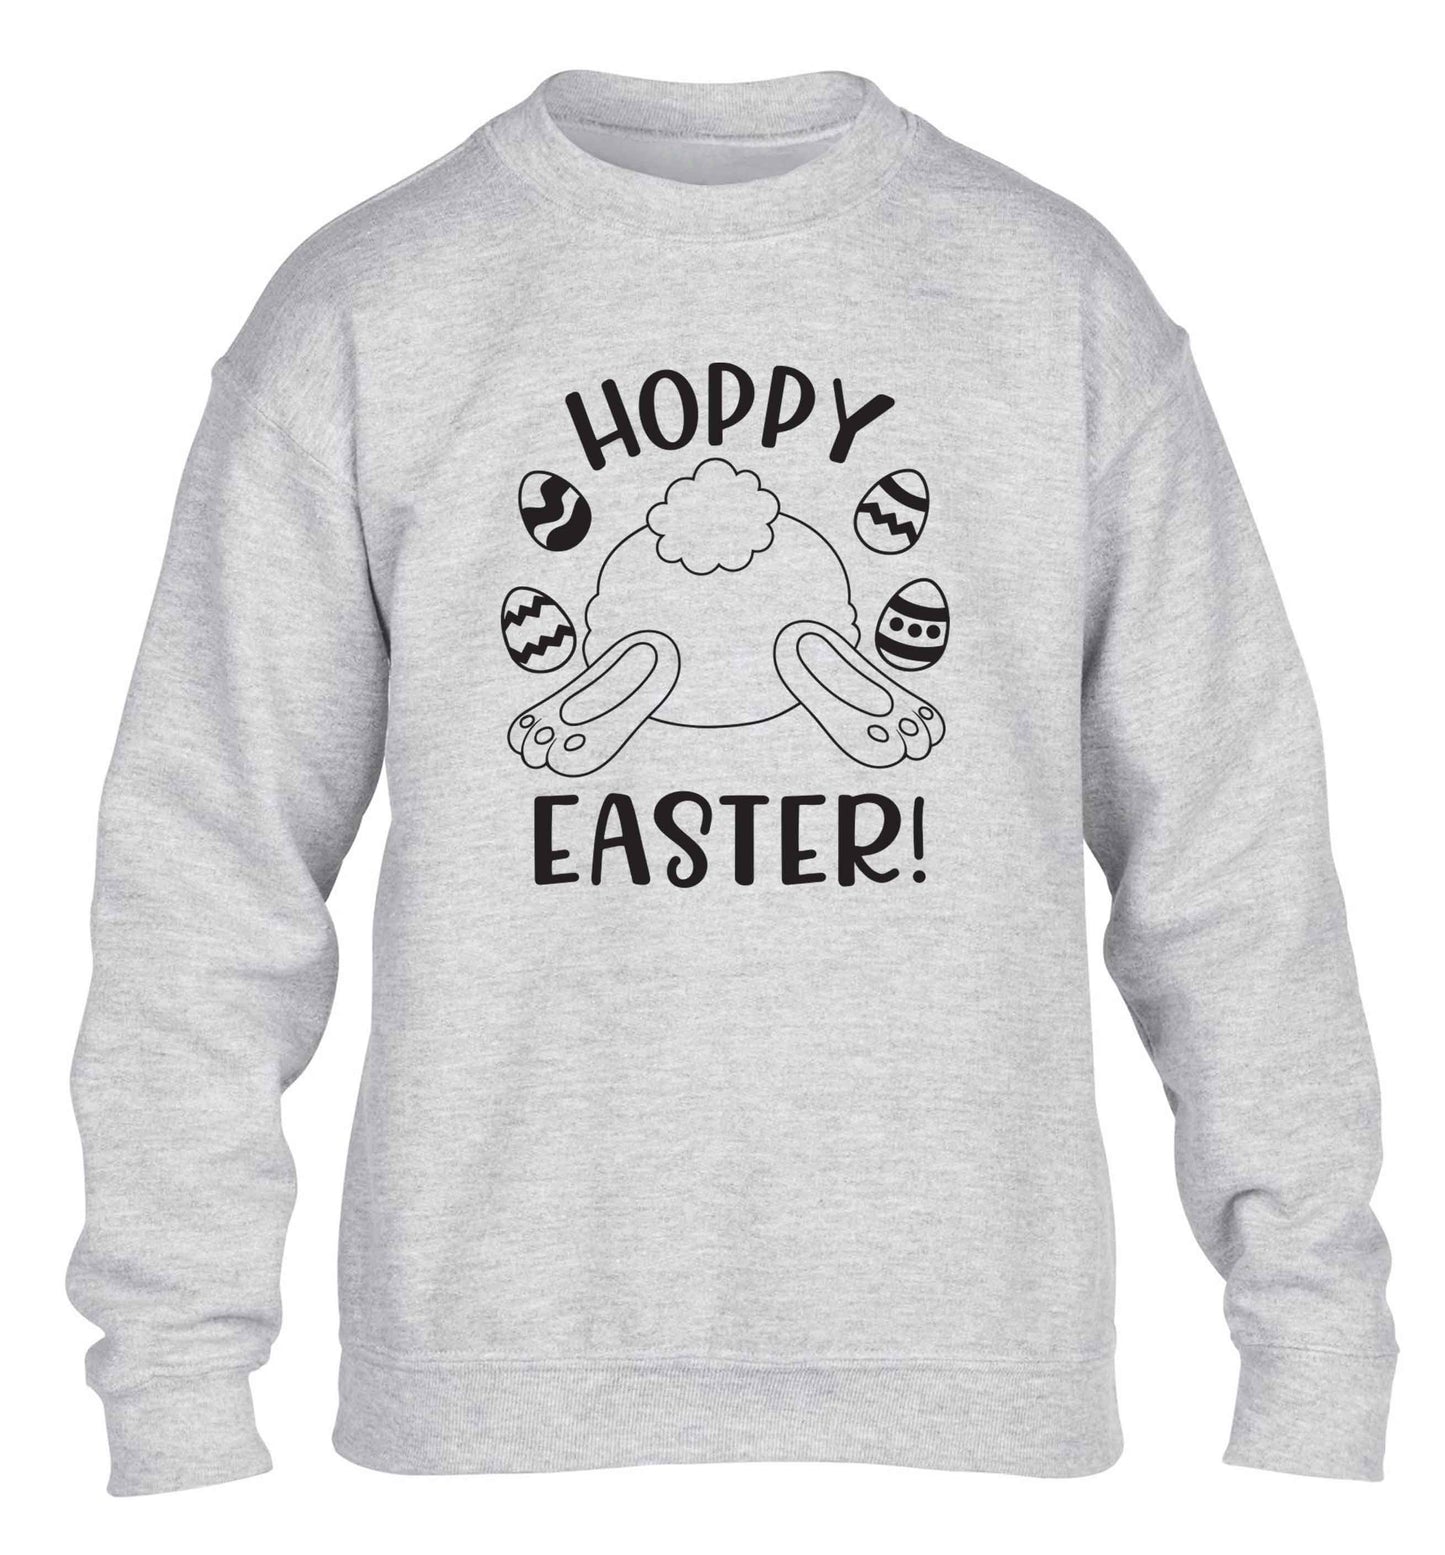 Hoppy Easter children's grey sweater 12-13 Years